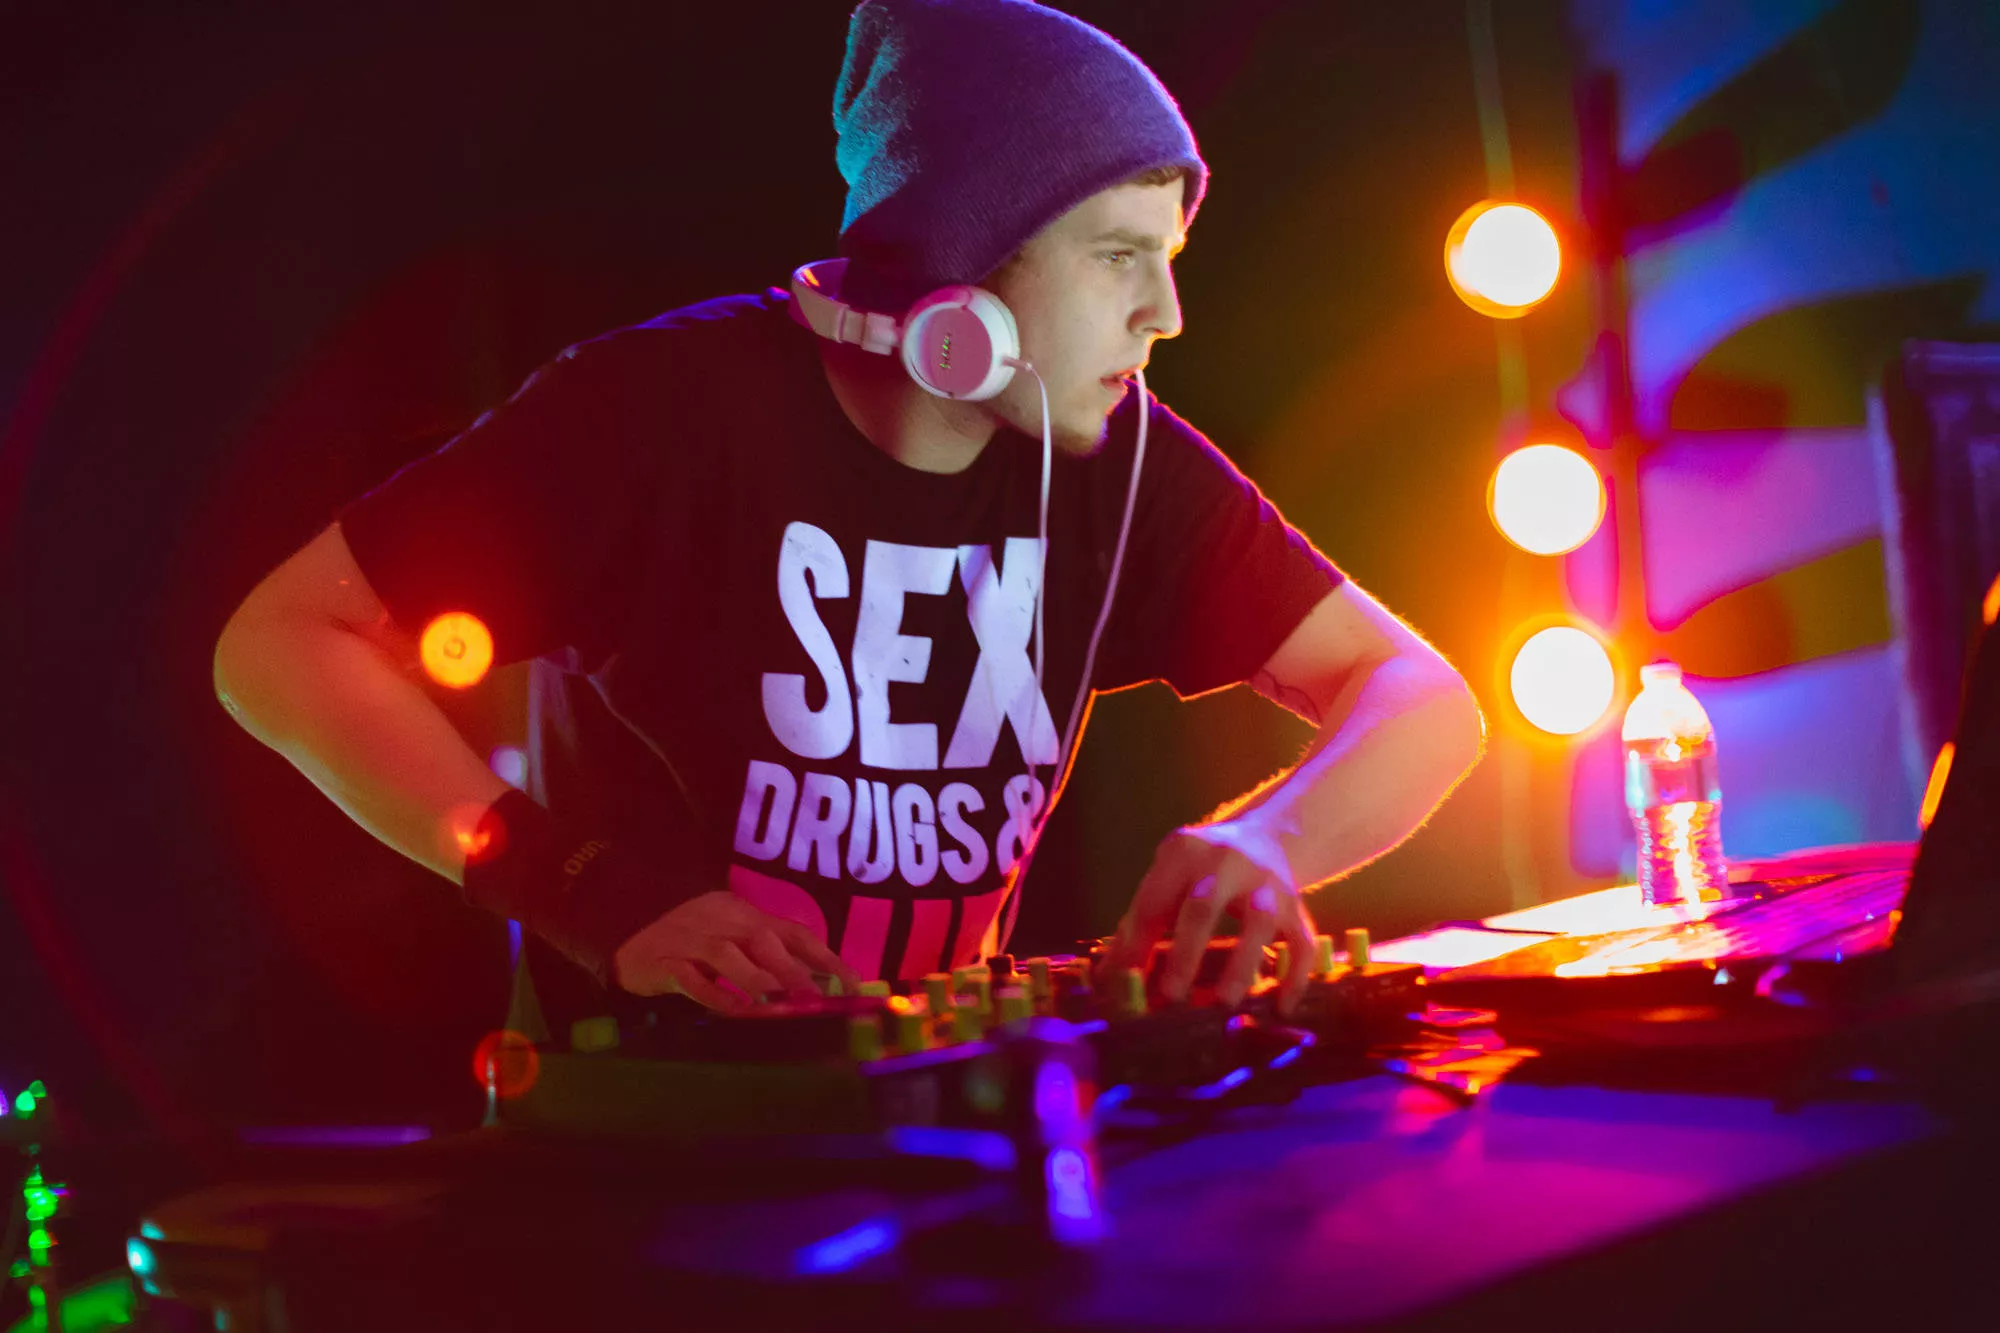 DJs – An Image Gallery of DJs in the Chico Music Scene